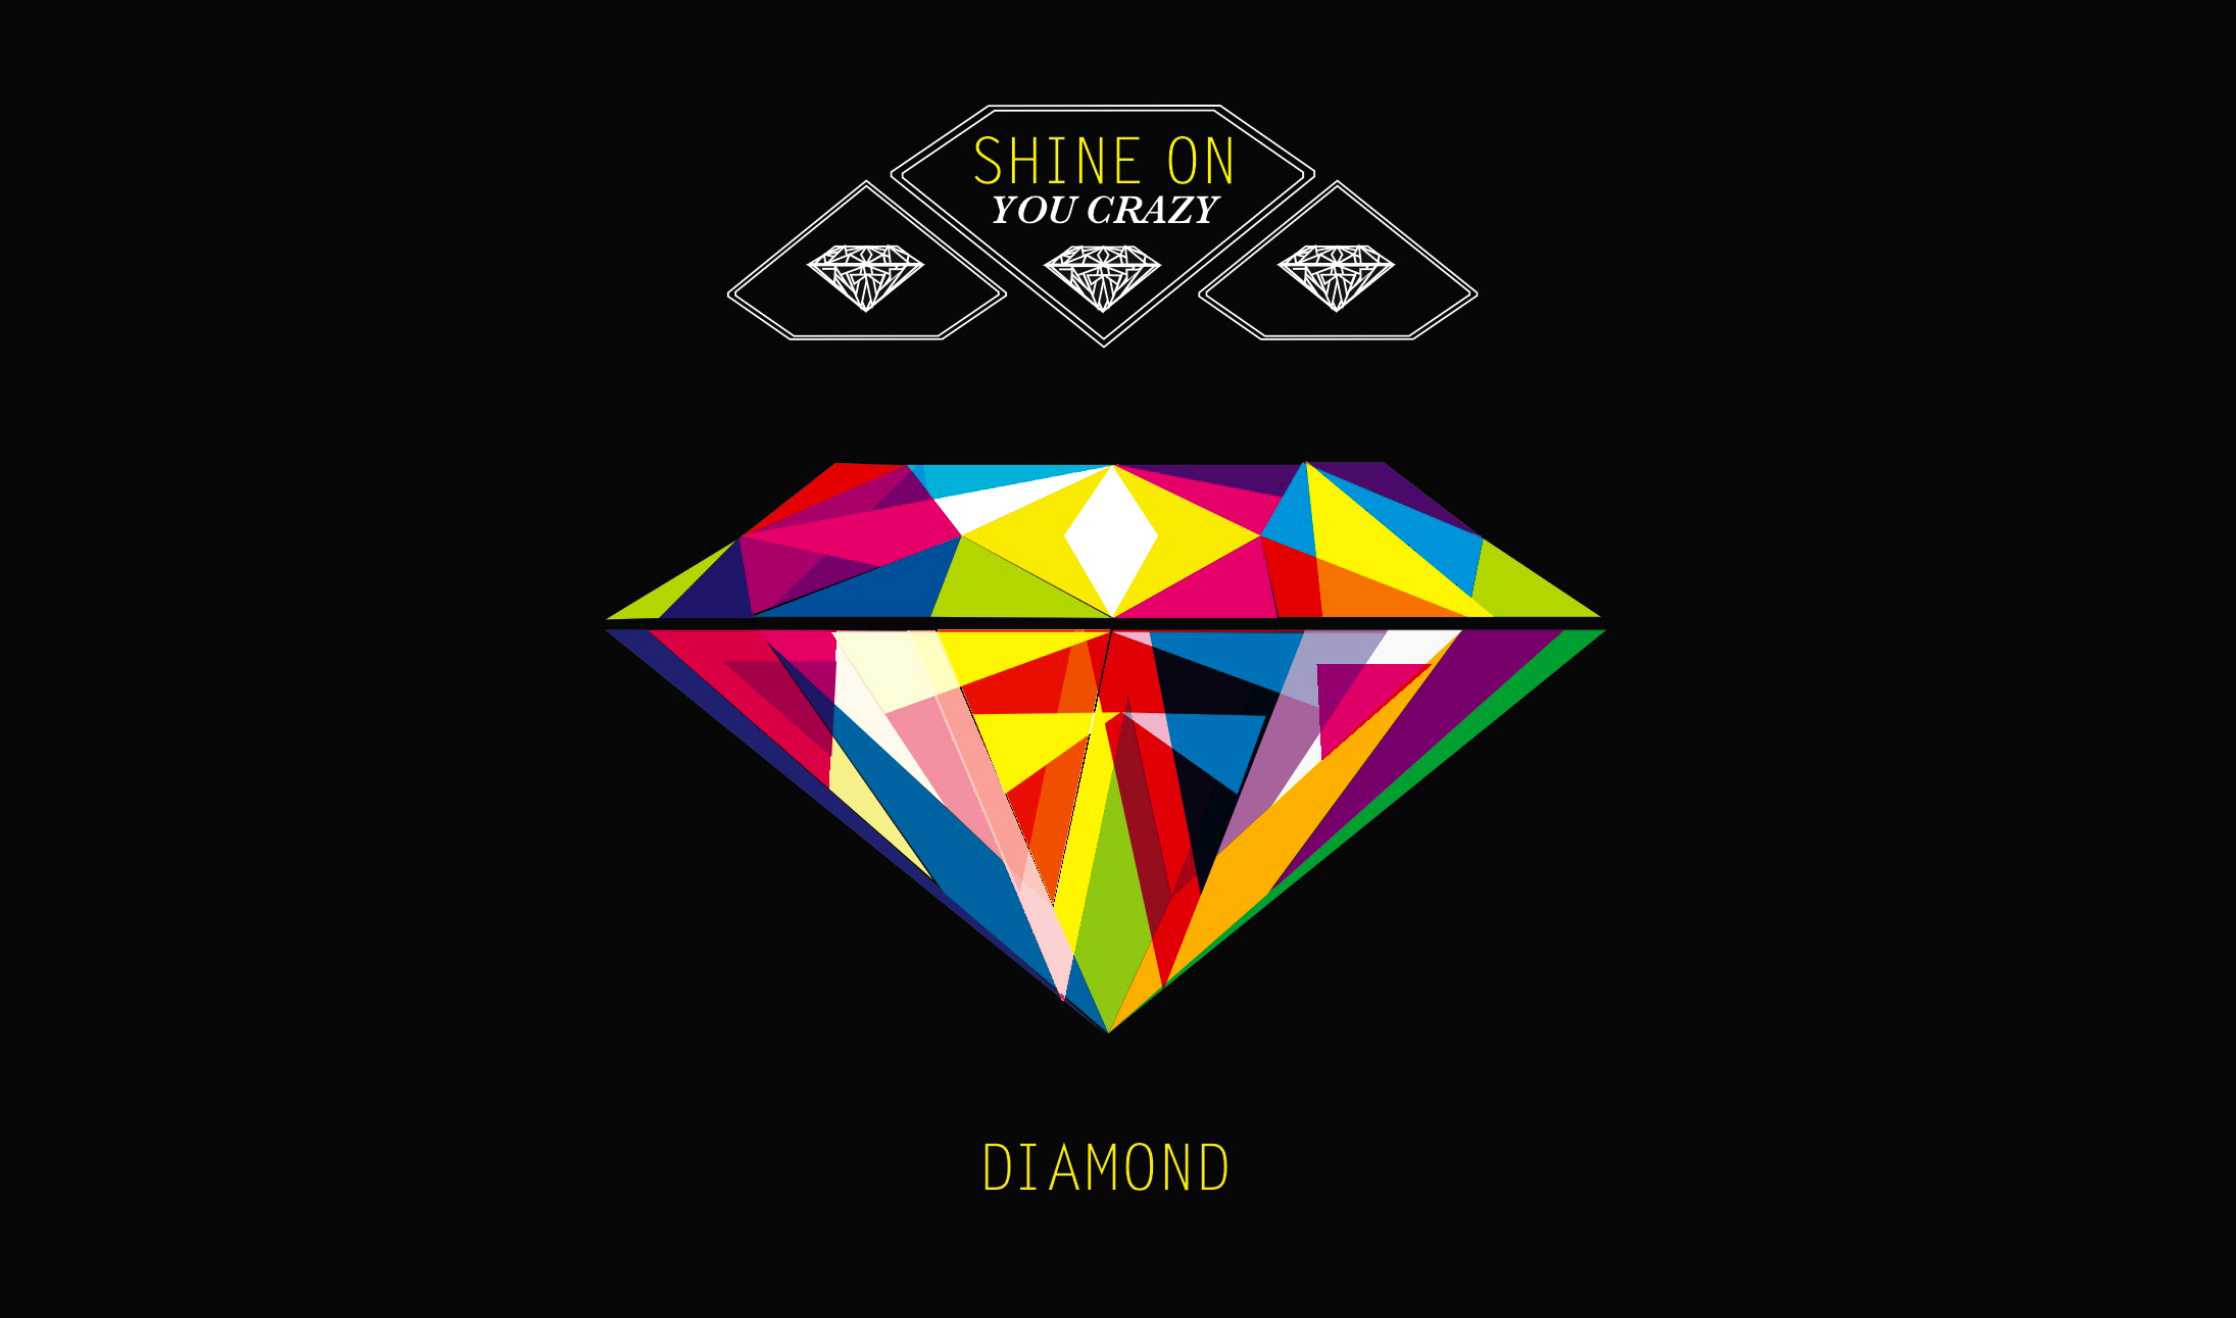 Shine on you crazy diamond - факты о песне. pink floyd (пинк флойд), текст песни.